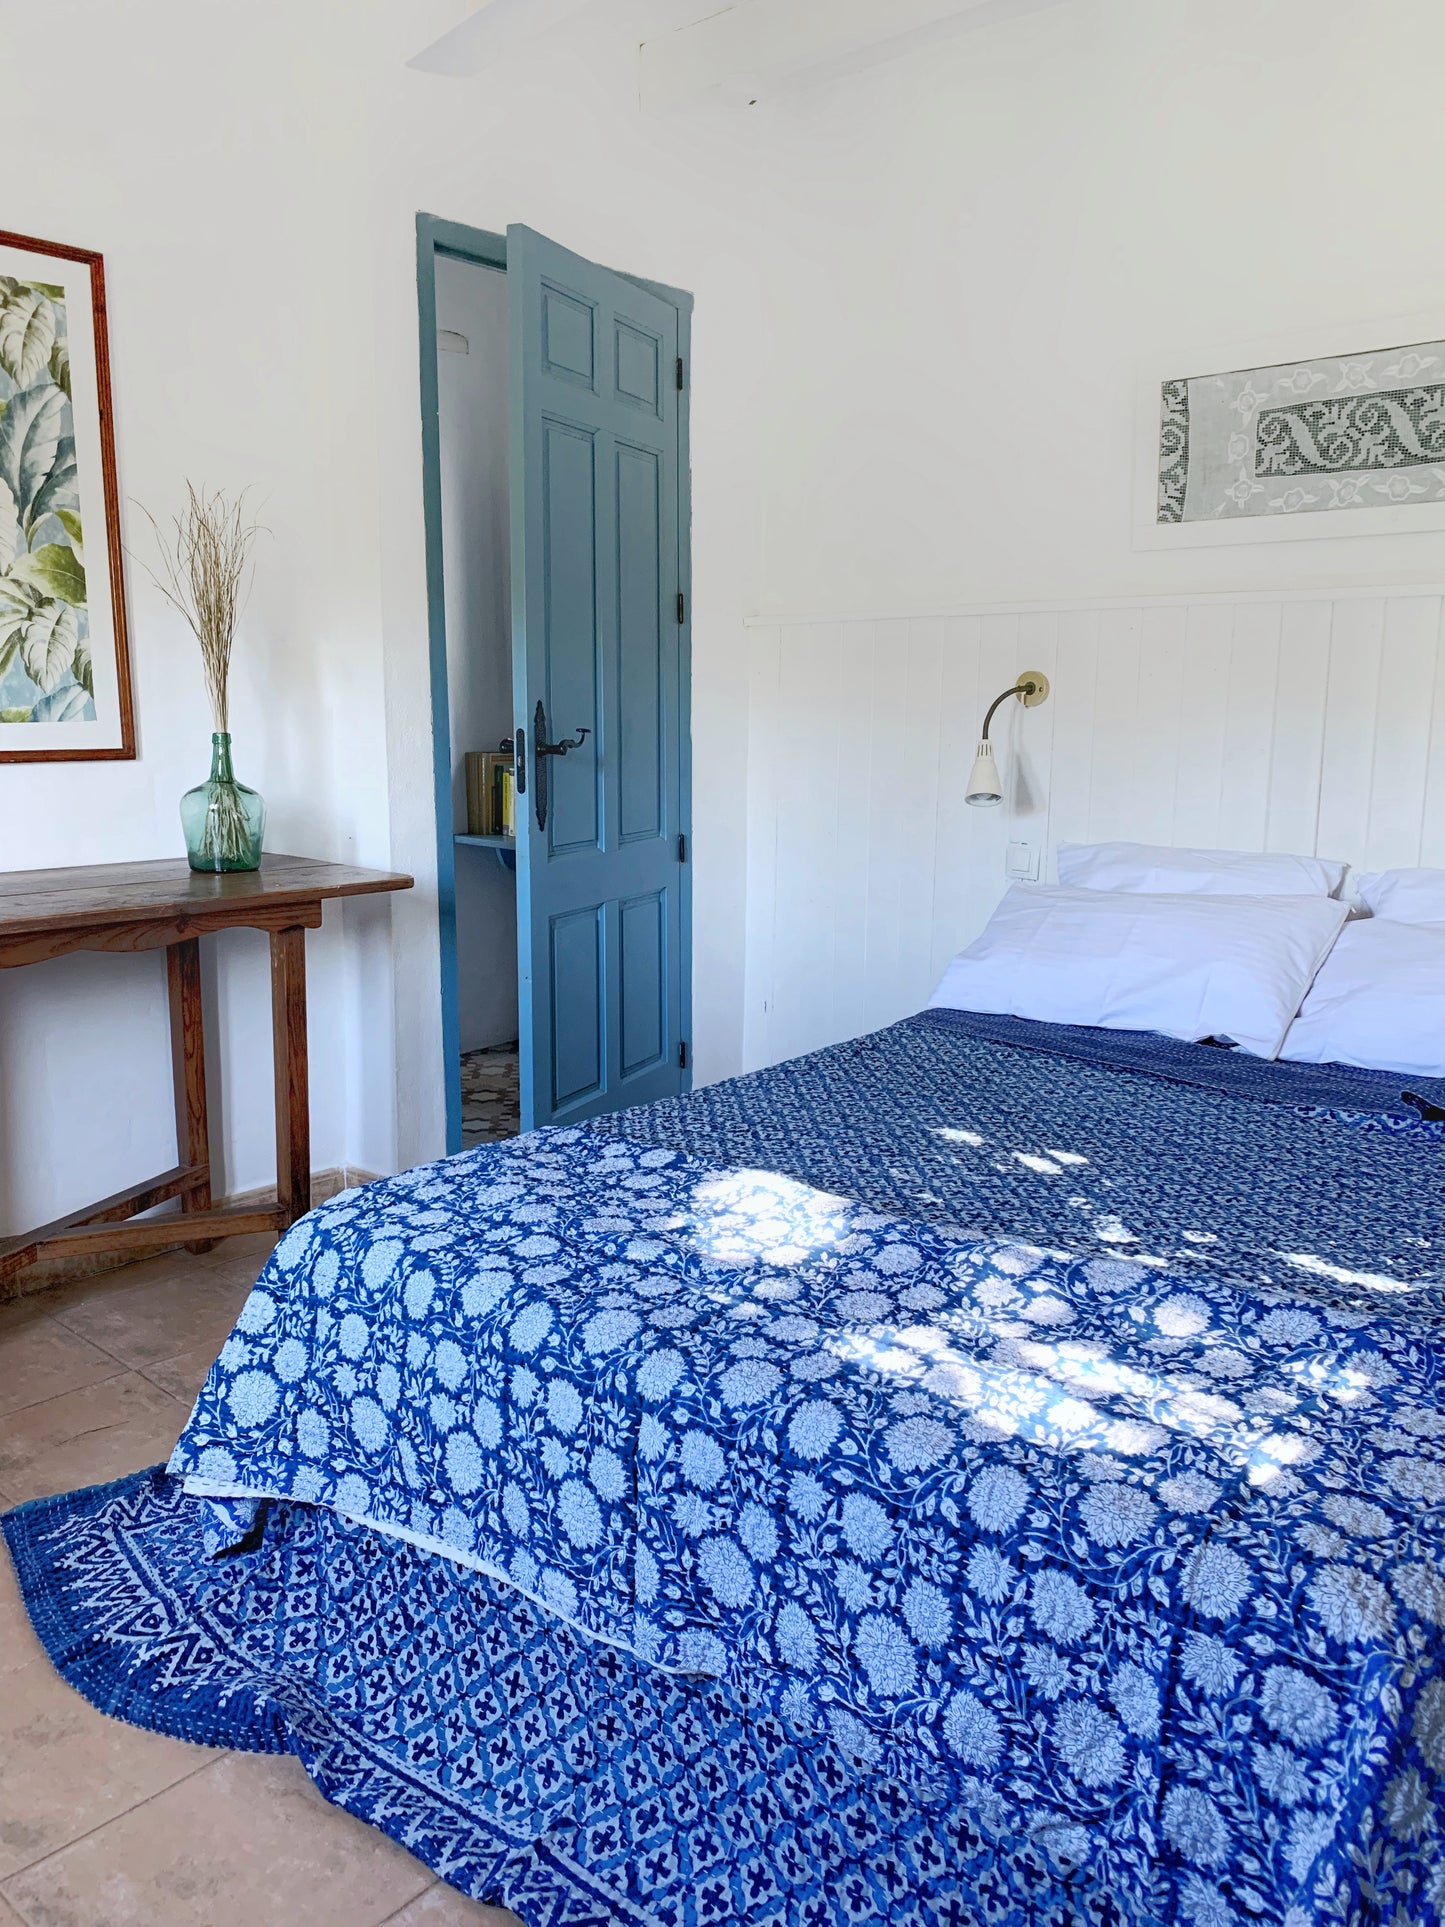 Kantha algodón 100% estampado artesanal block print India · Plaid · Colcha verano · Cubre sofá hindú · Flores azul blanco